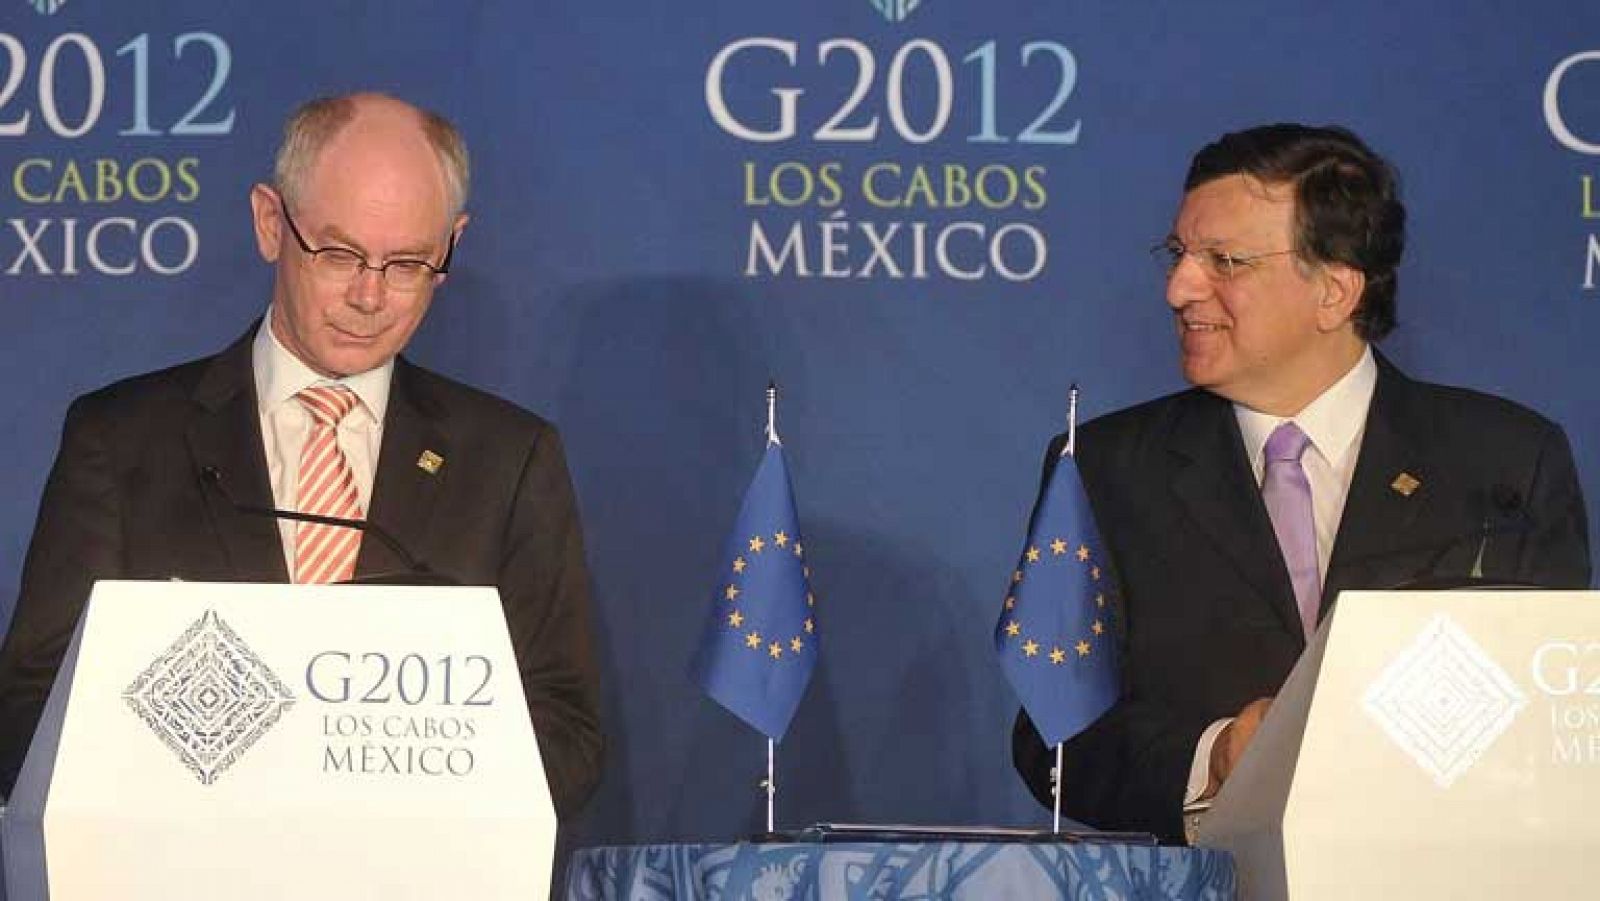 Telediario 1: La zona euro marca el G20 | RTVE Play